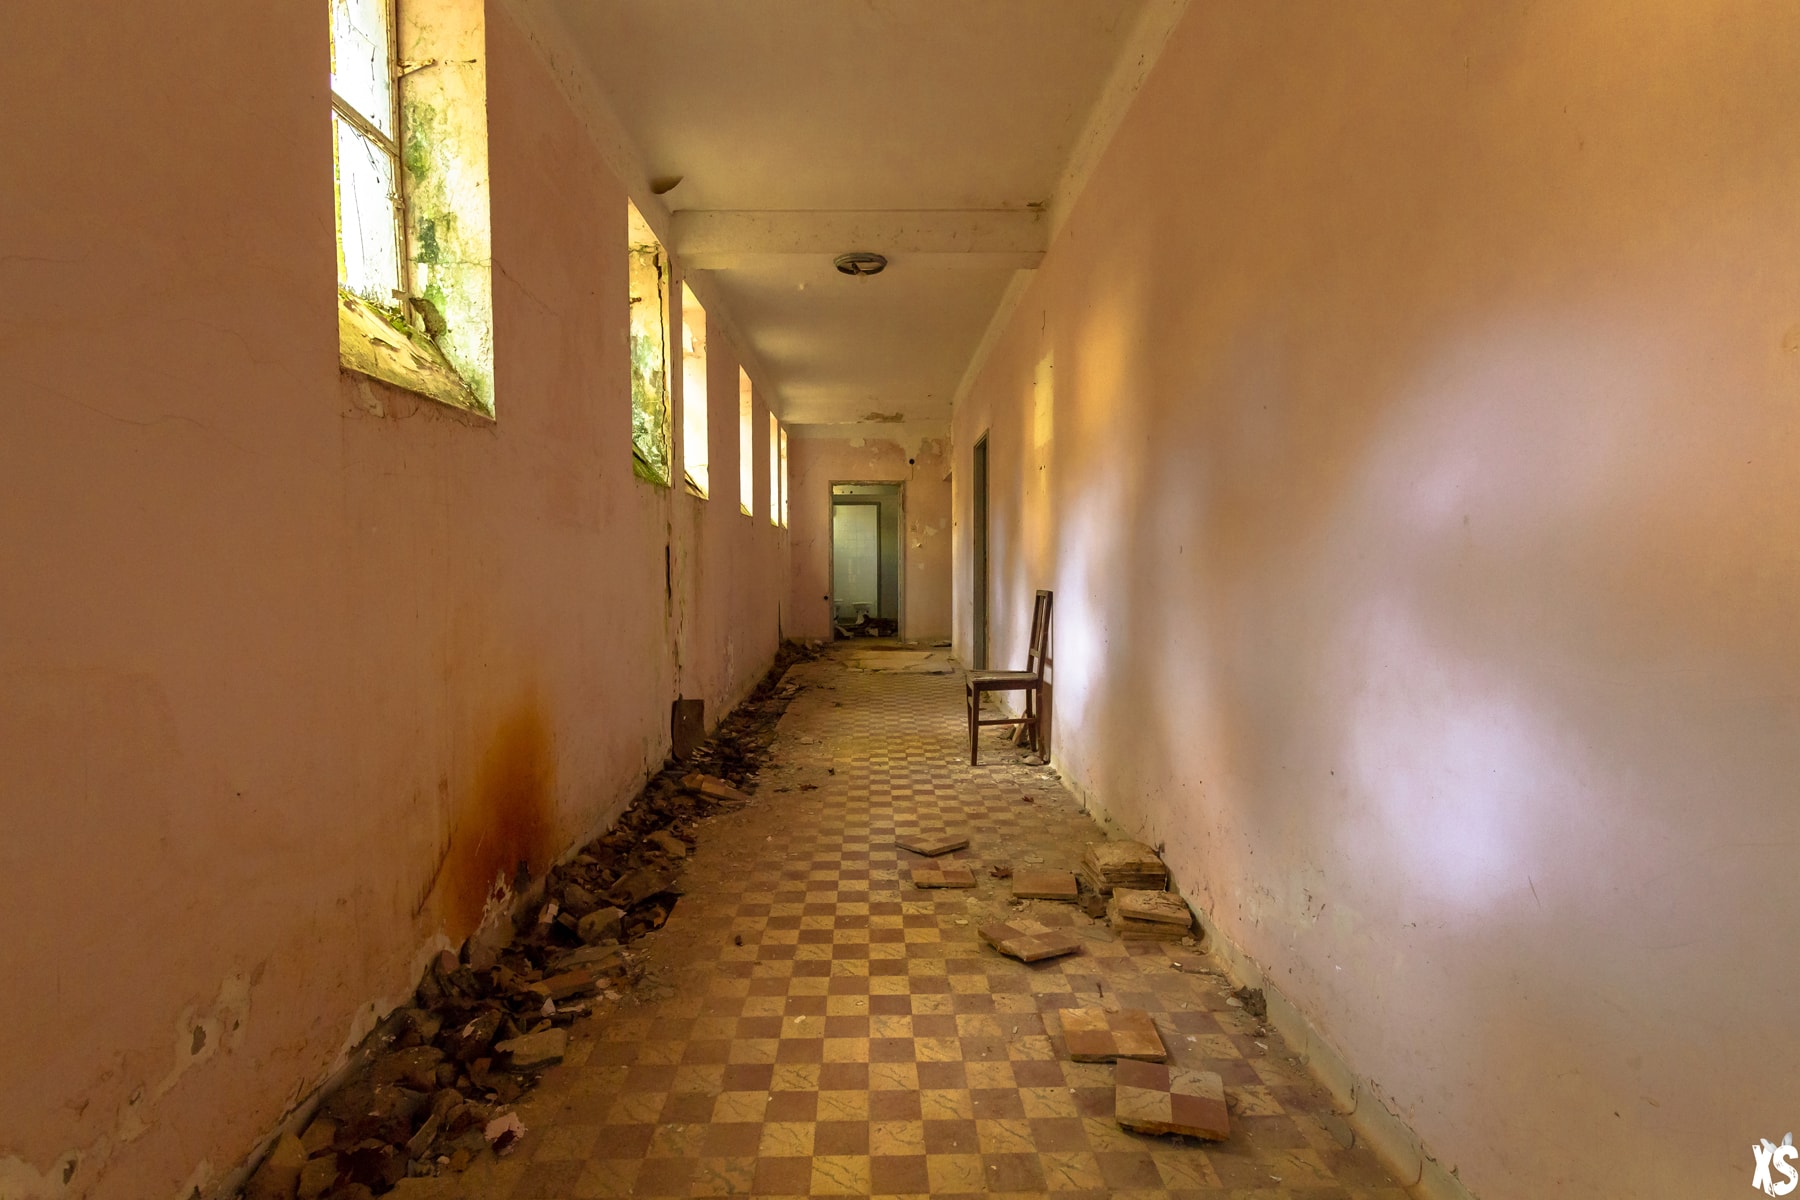 Asile abandonné situé au Portugal | urbexsession.com/asile-marie-besnard | Urbex Portugal